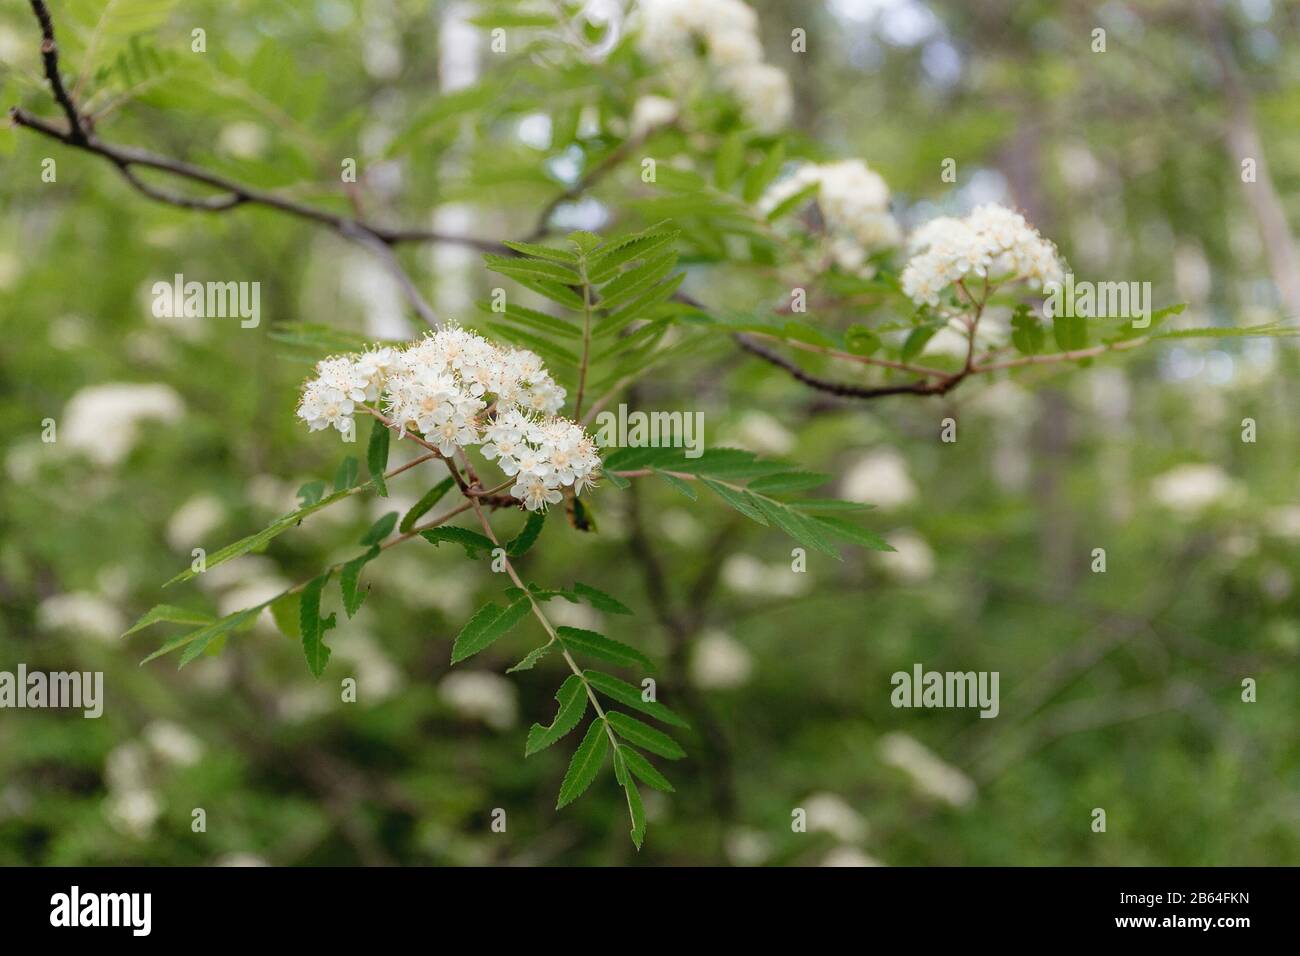 Rowan tree in bloom. Brunch of rowan tree flowers of white color and ...